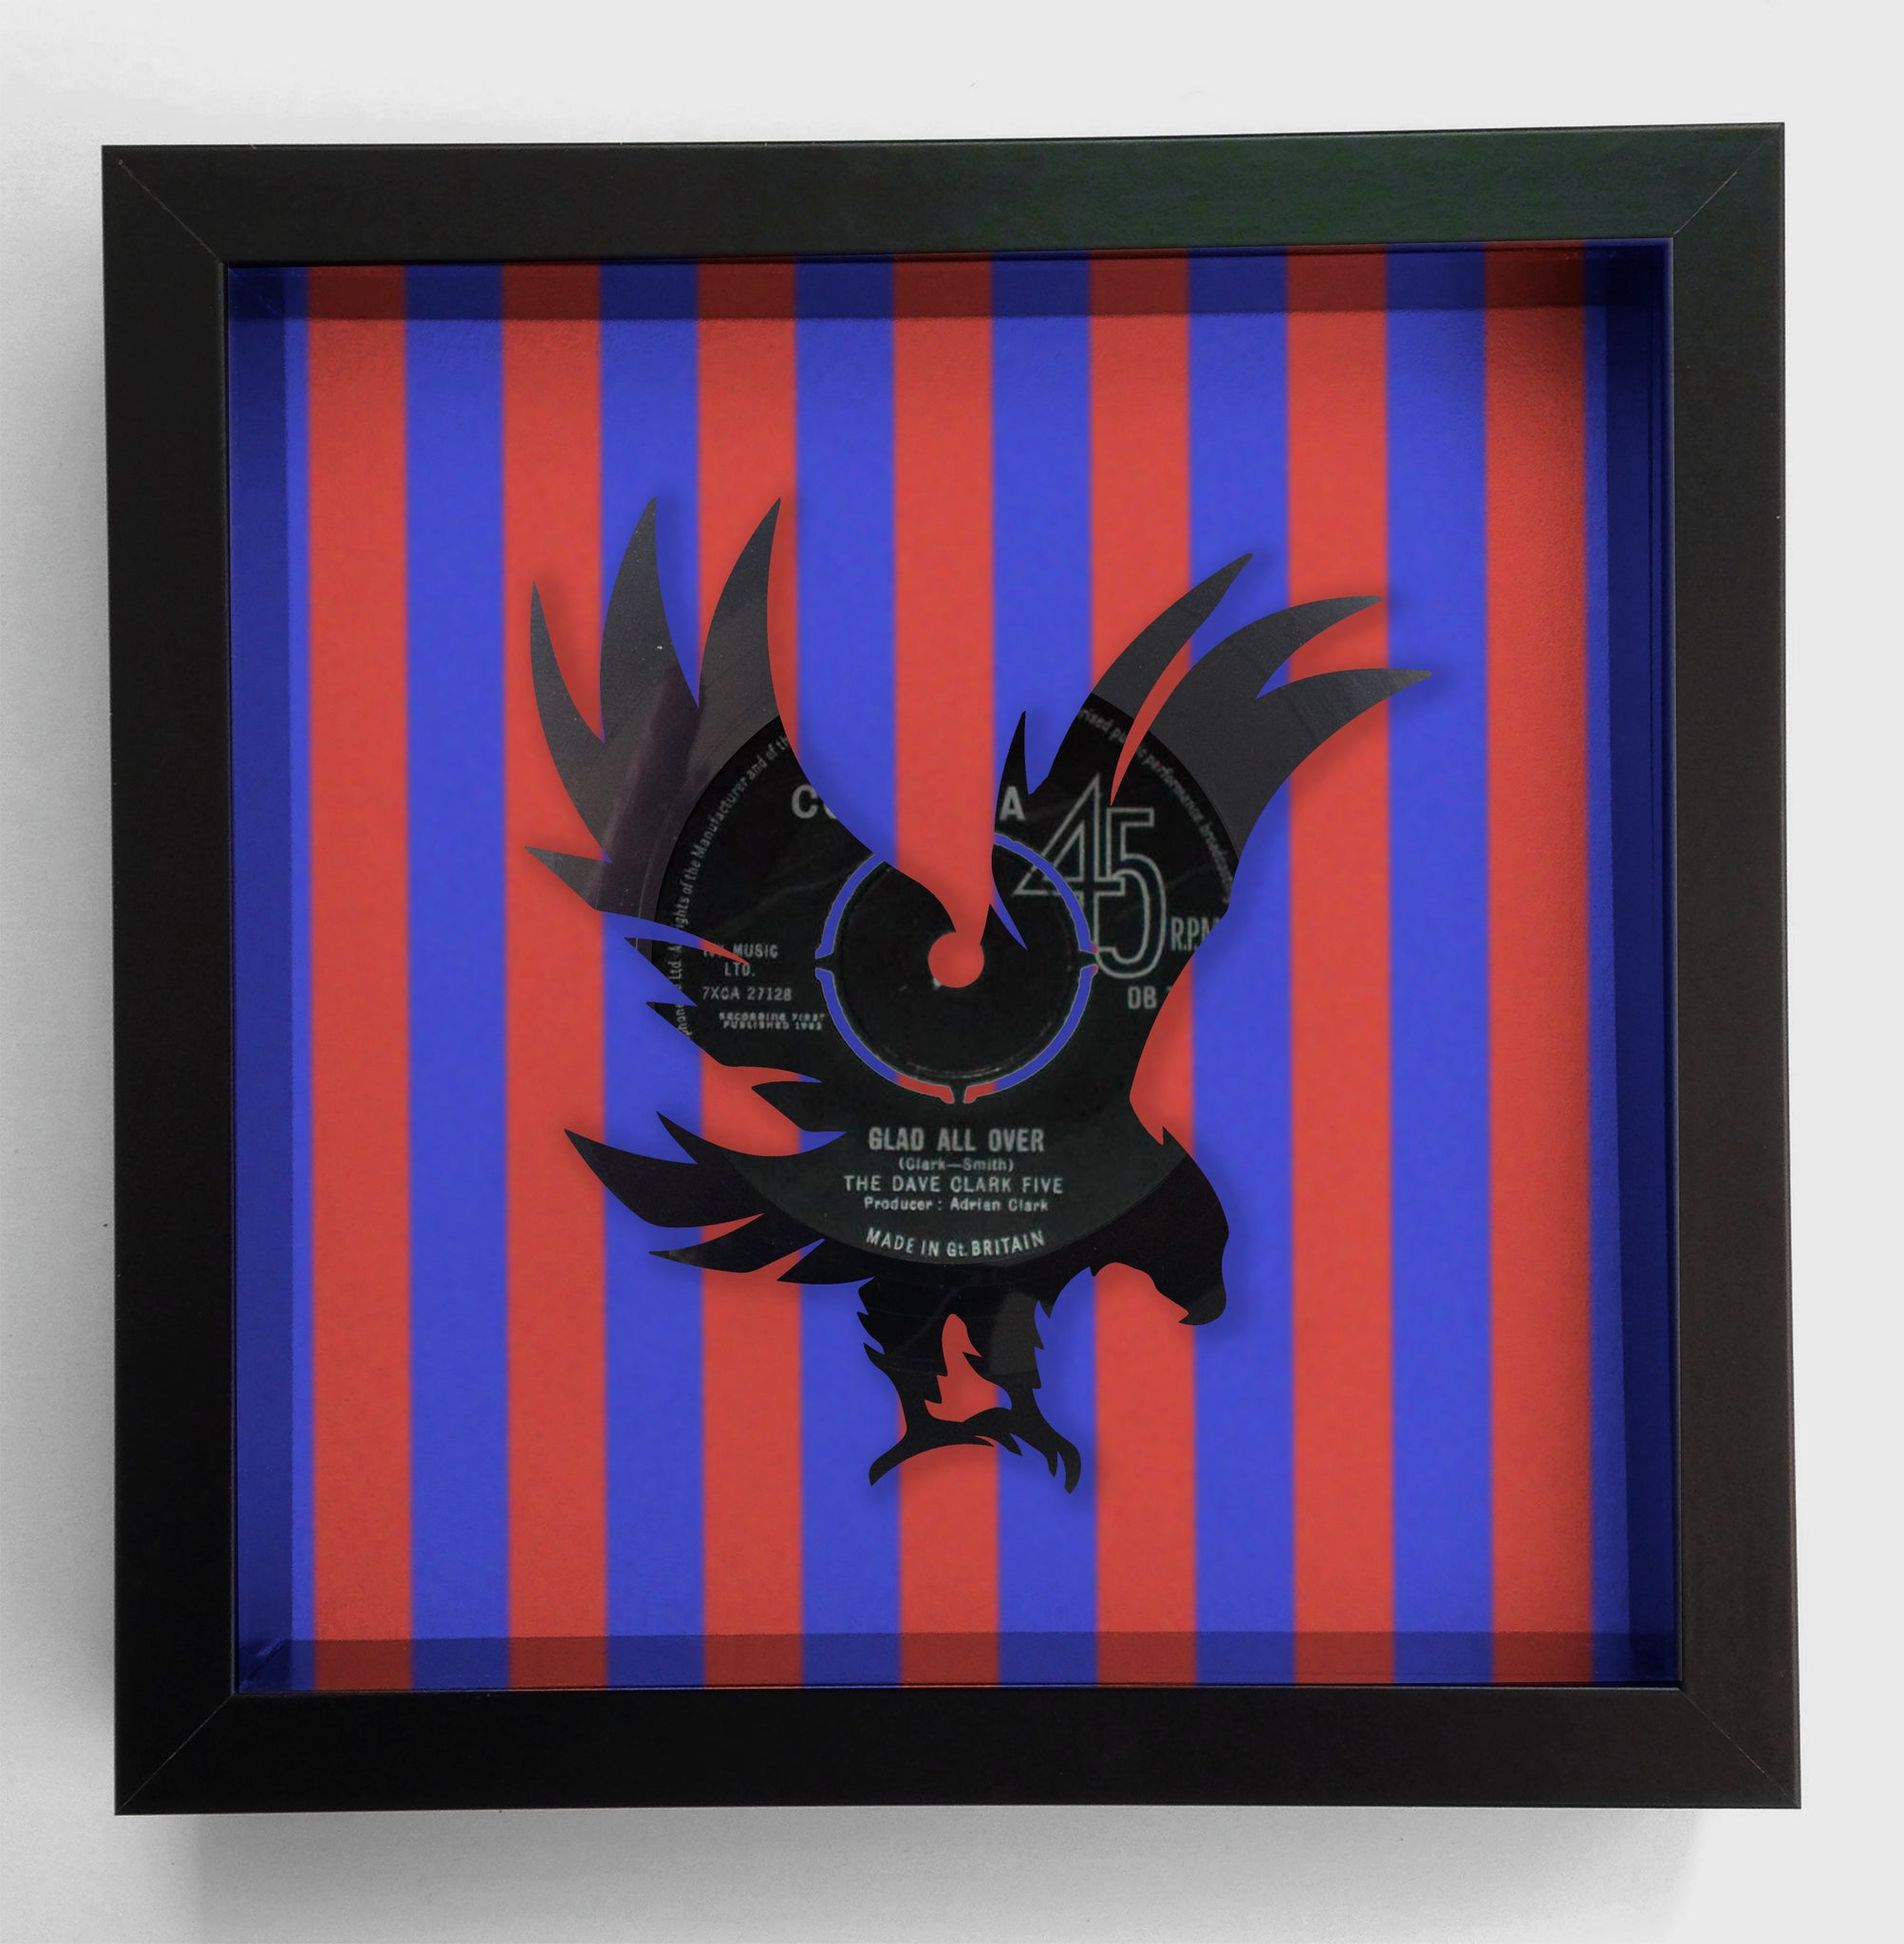 Crystal Palace - Glad All Over by Dave Clark Five - Eagles - Vinyl Rec –  Tolhurst Vinyl Art